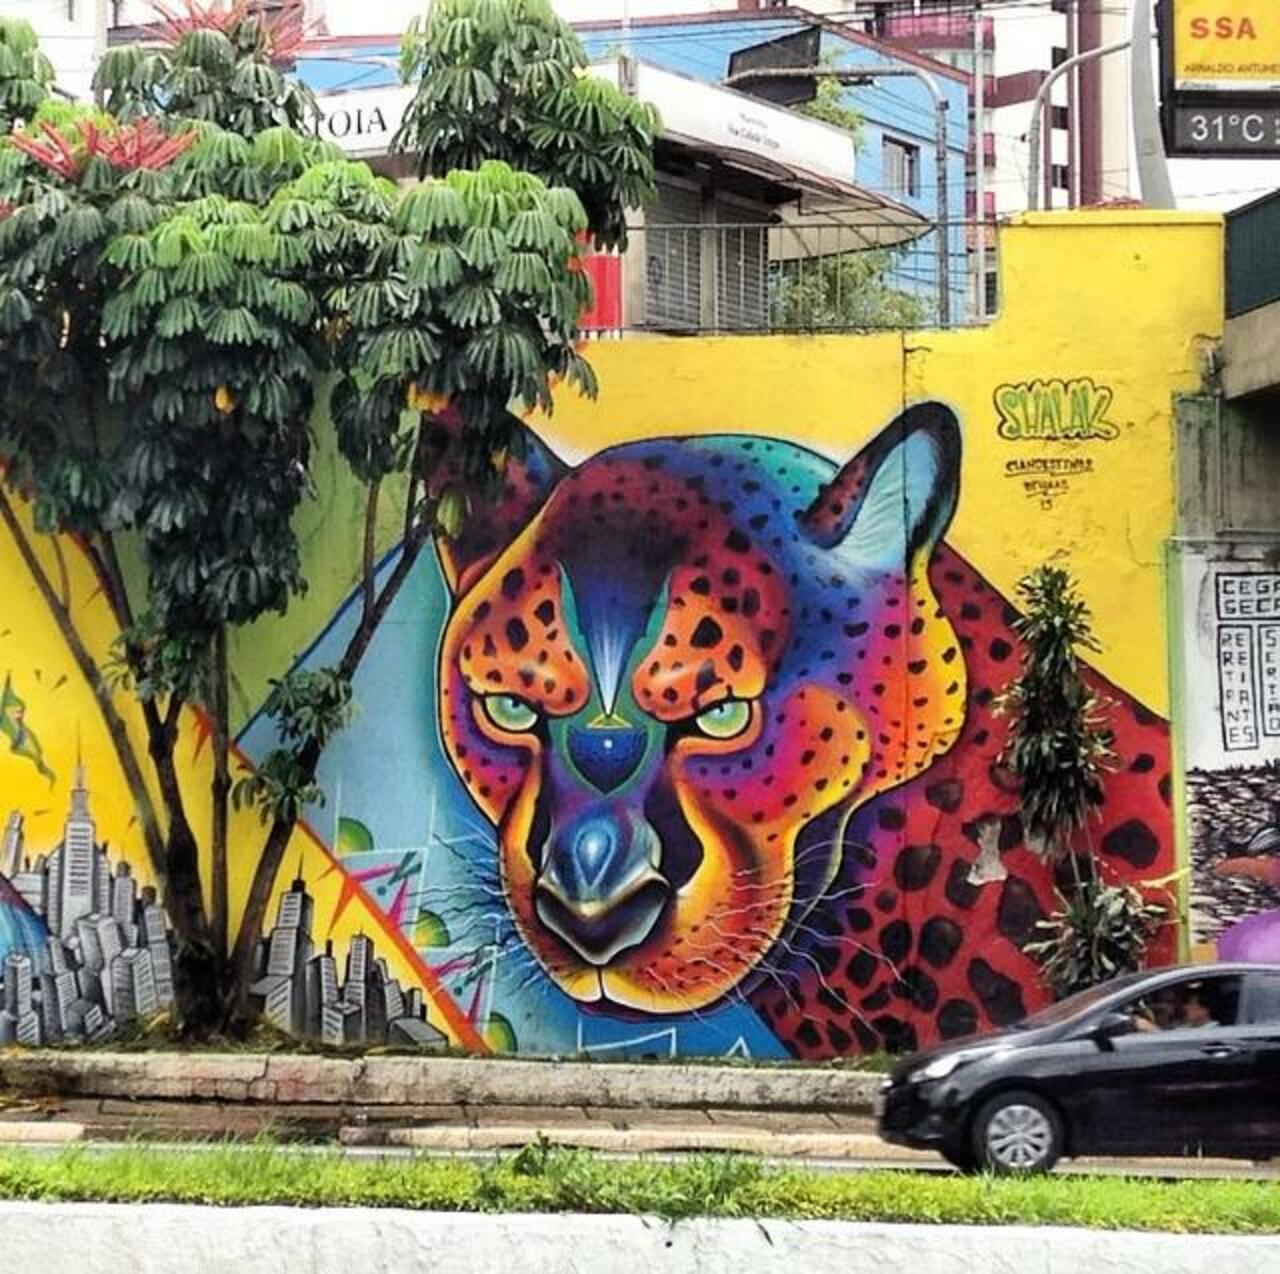 Artist ShalakAttack beautiful & colourful nature in Street Art piece in São Paulo 

#art #graffiti #mural #streetart http://t.co/Yw3gKTxRtN